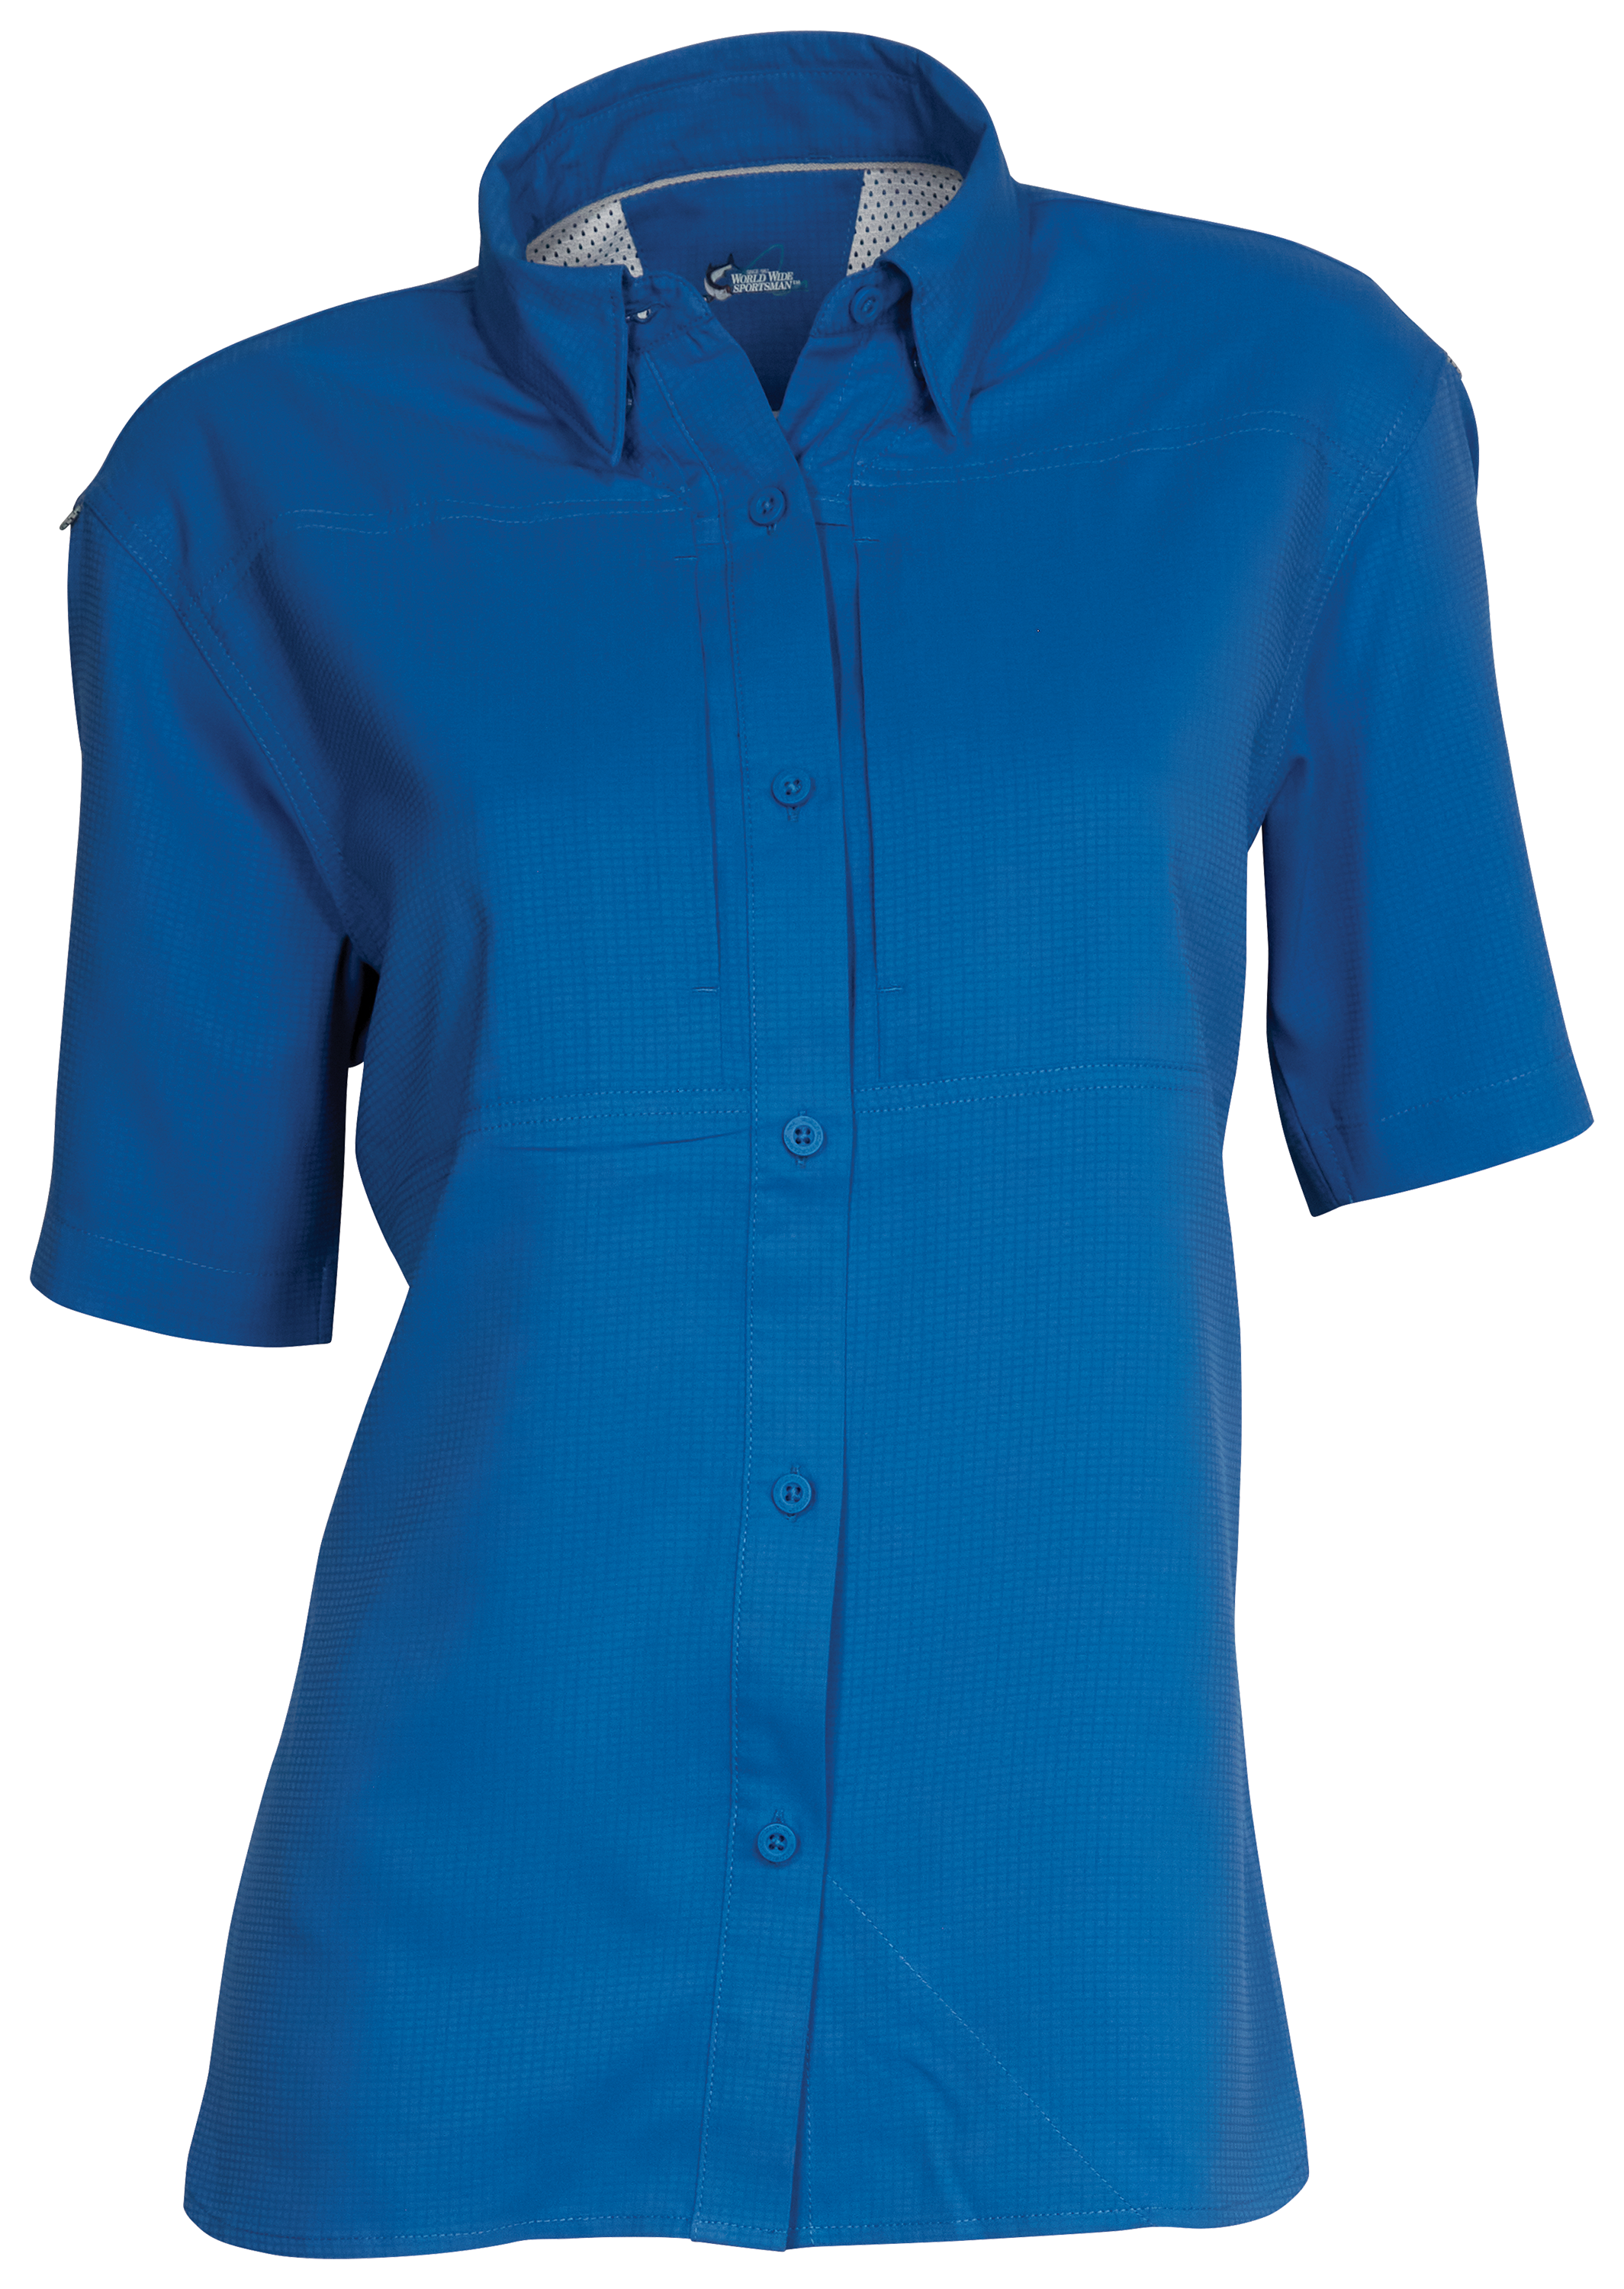 World Wide Sportsman Marina Short-Sleeve Shirt for Ladies - Delft Blue - XXL